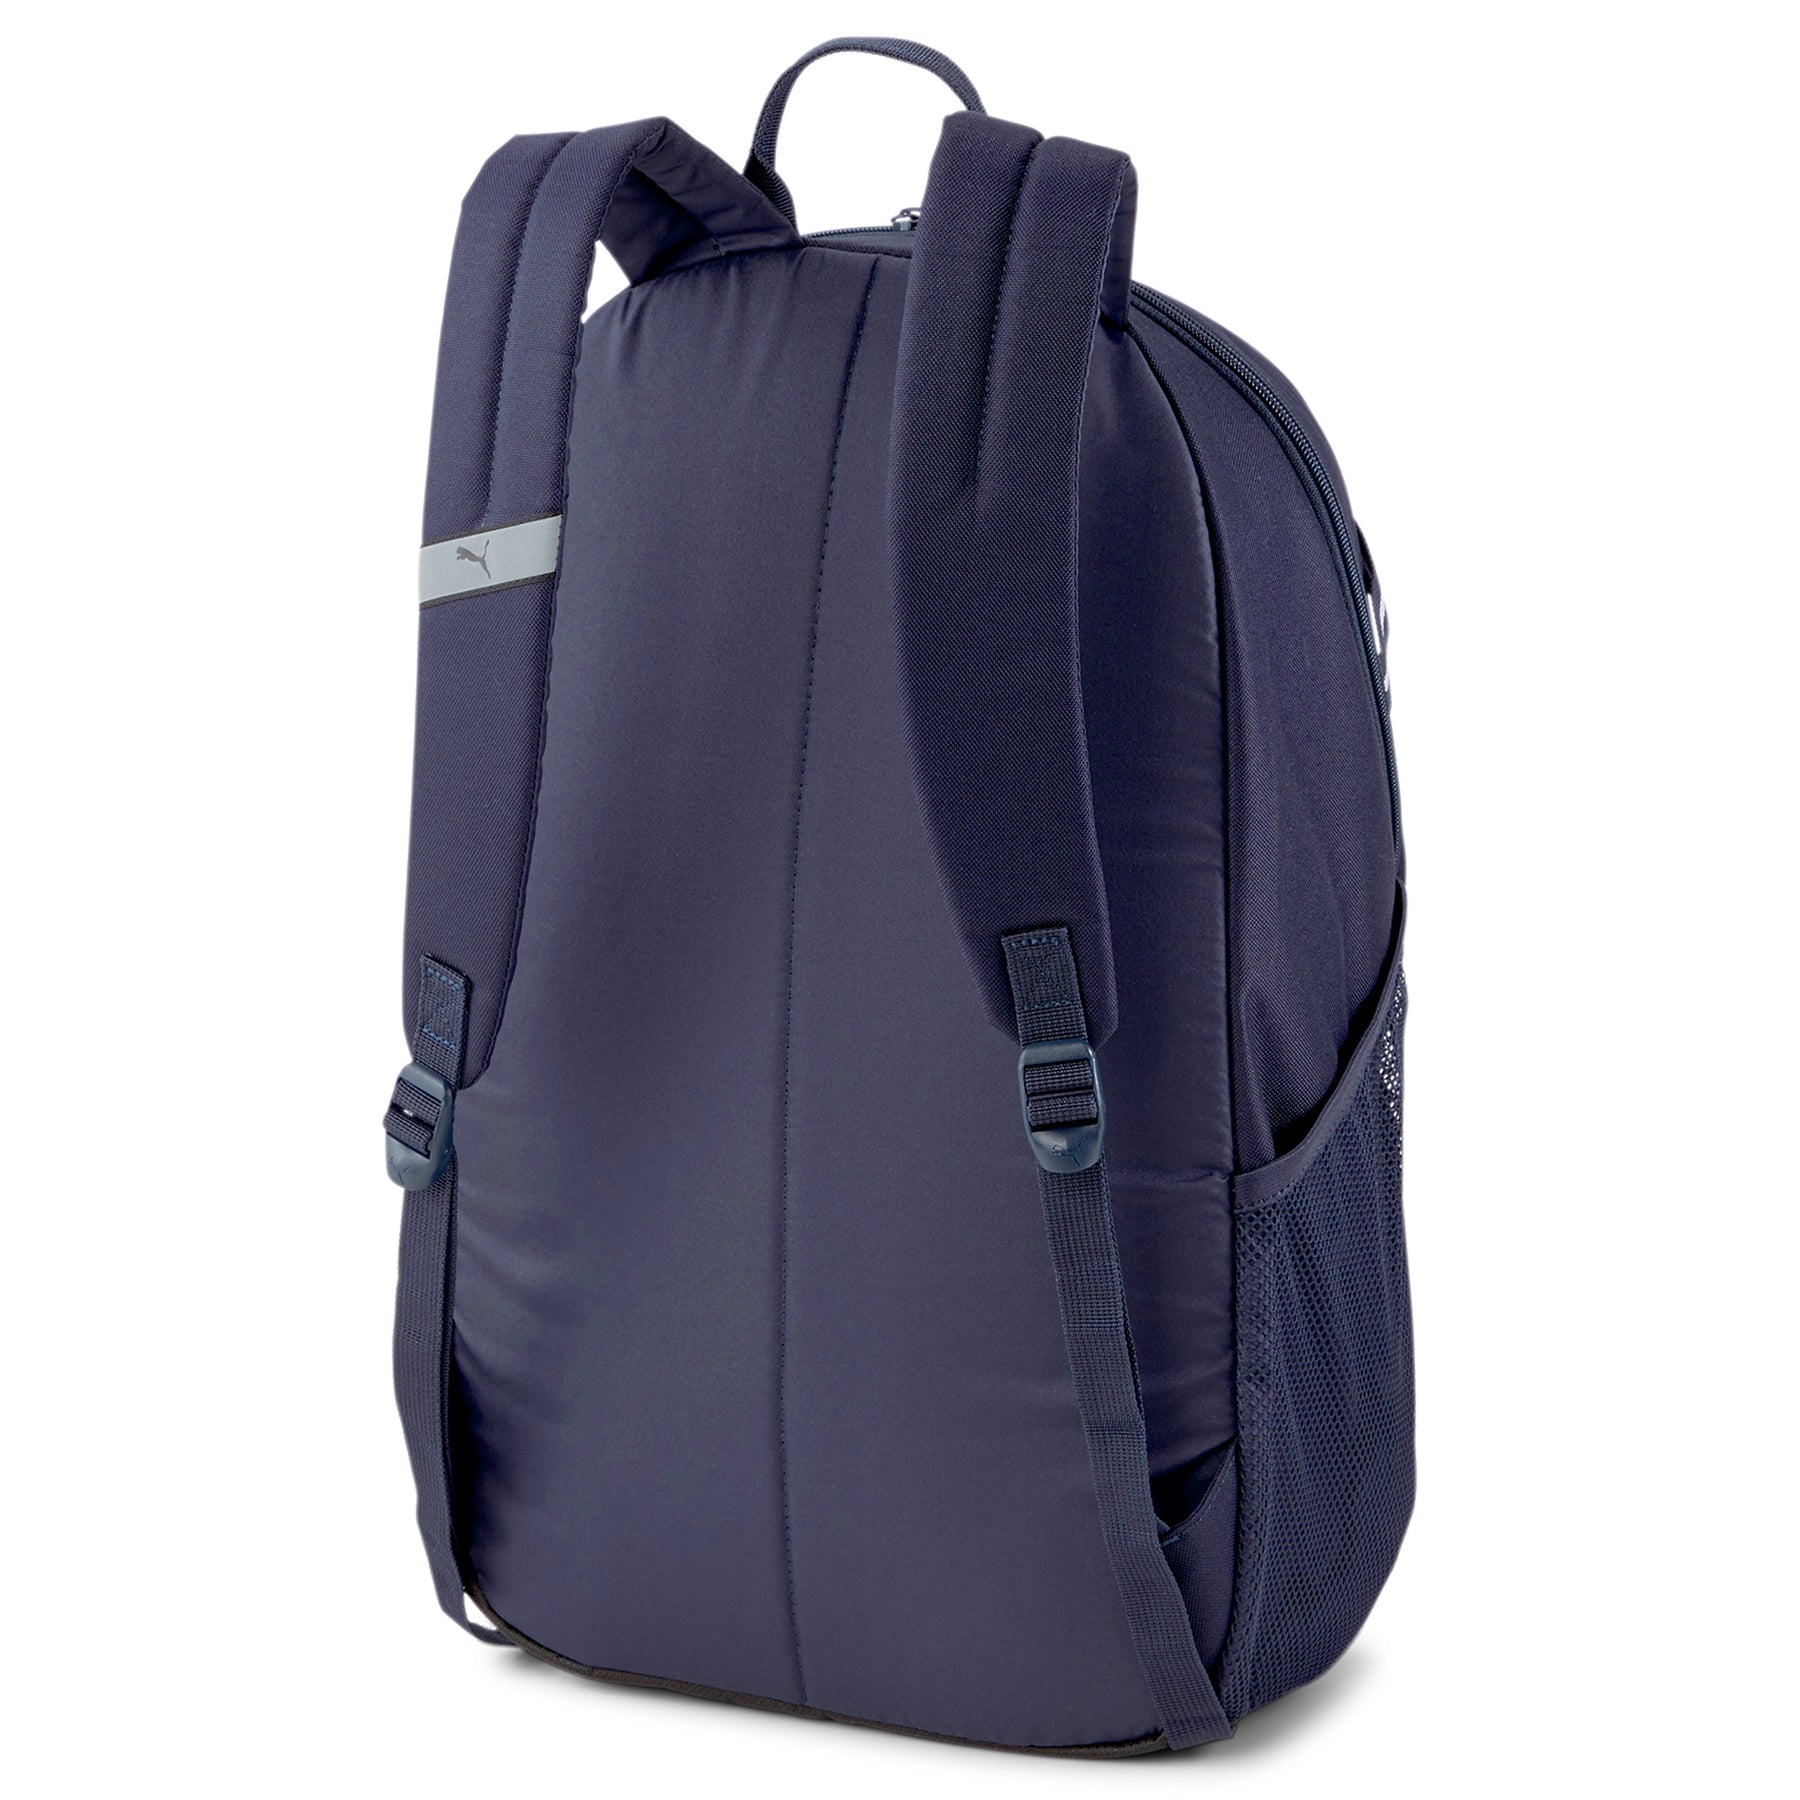 Comprar Mochila Puma Plus Backpack 078391-11 Online